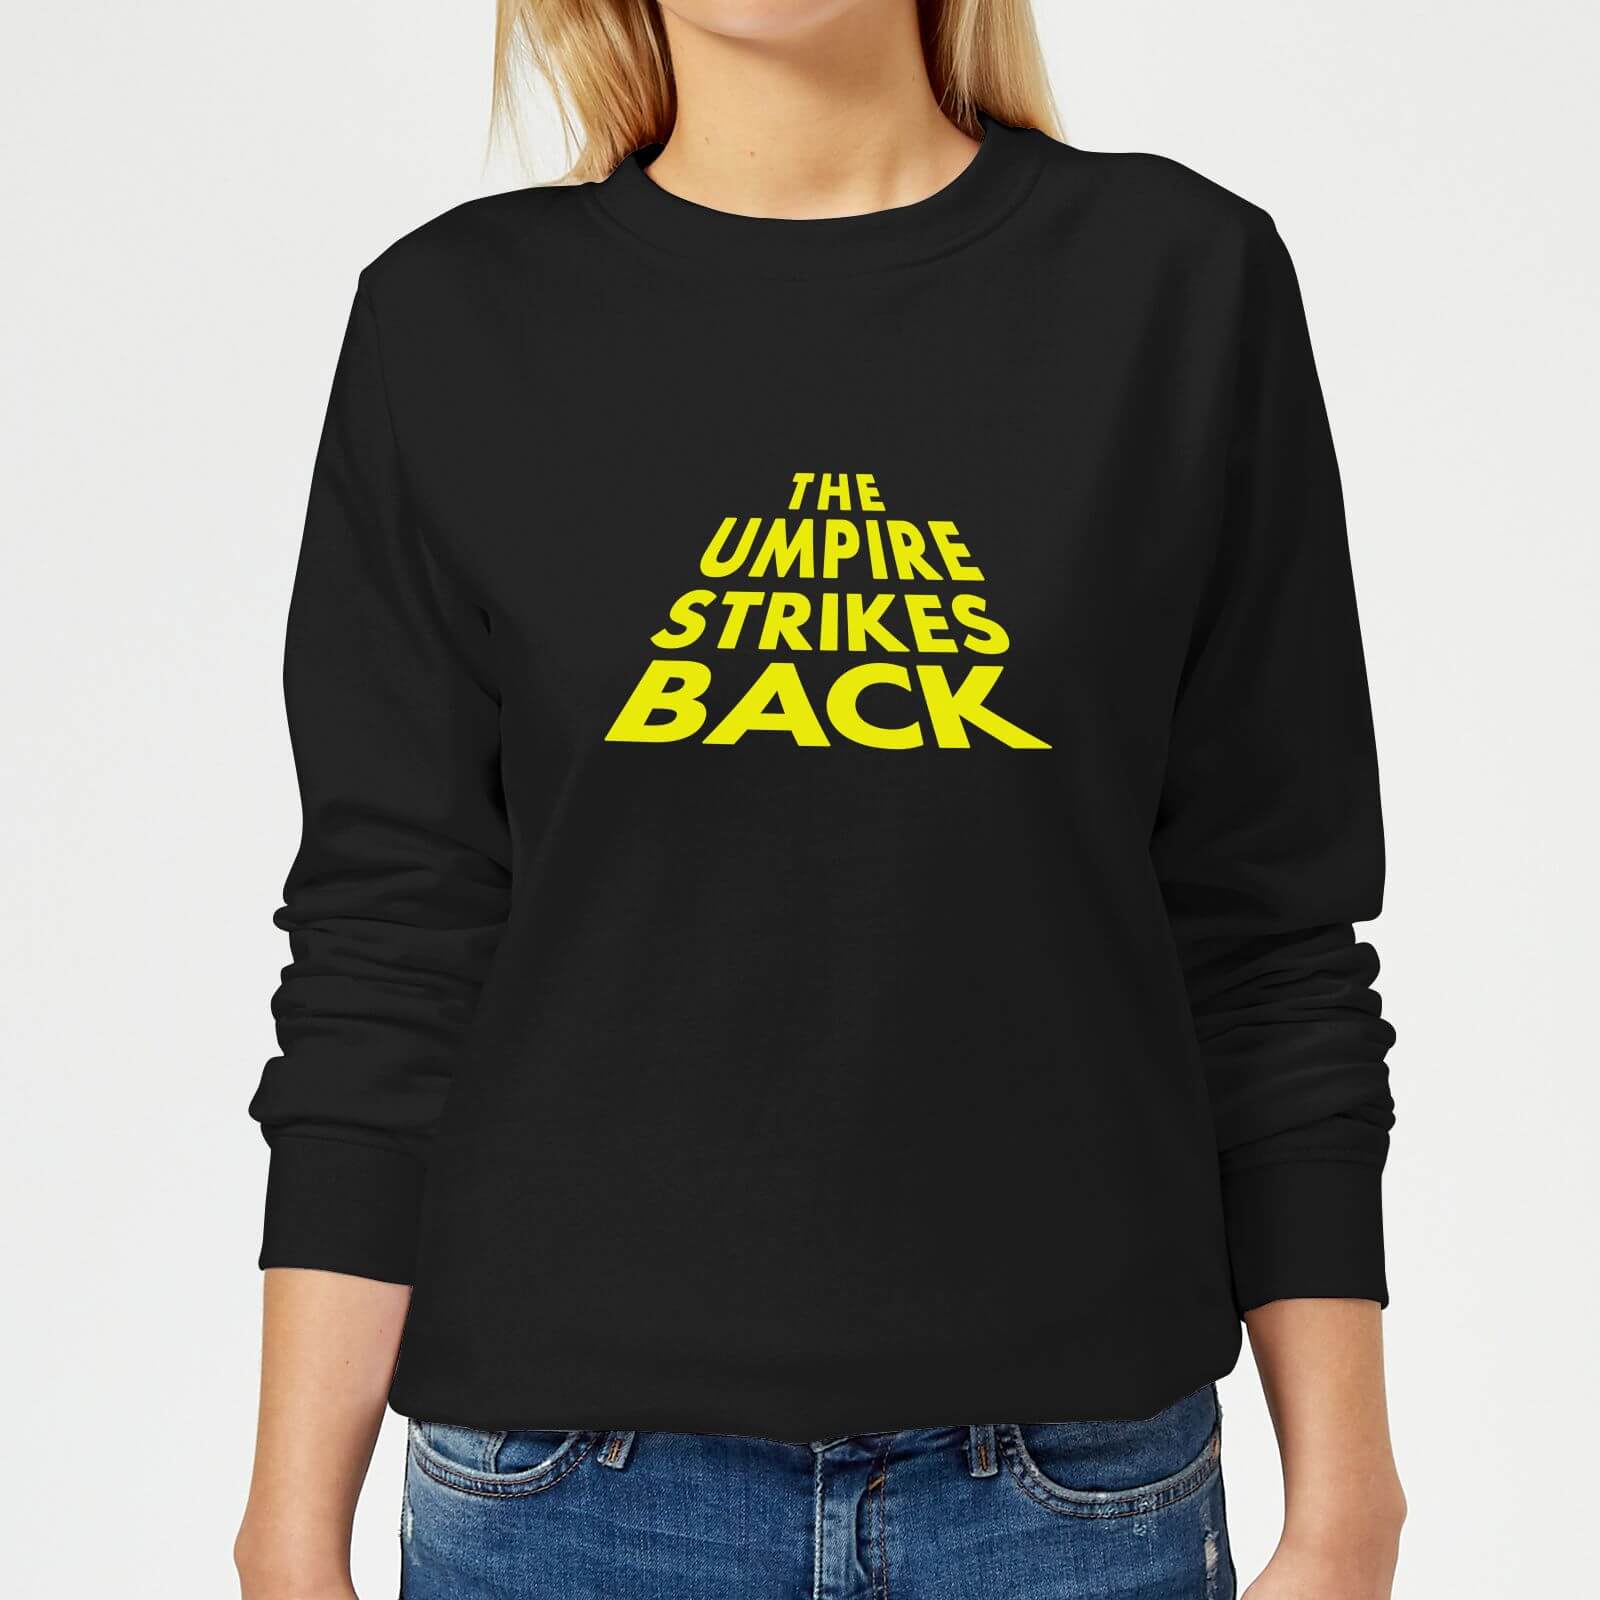 The Umpire Strikes Back Women's Sweatshirt - Black - 5XL - Black